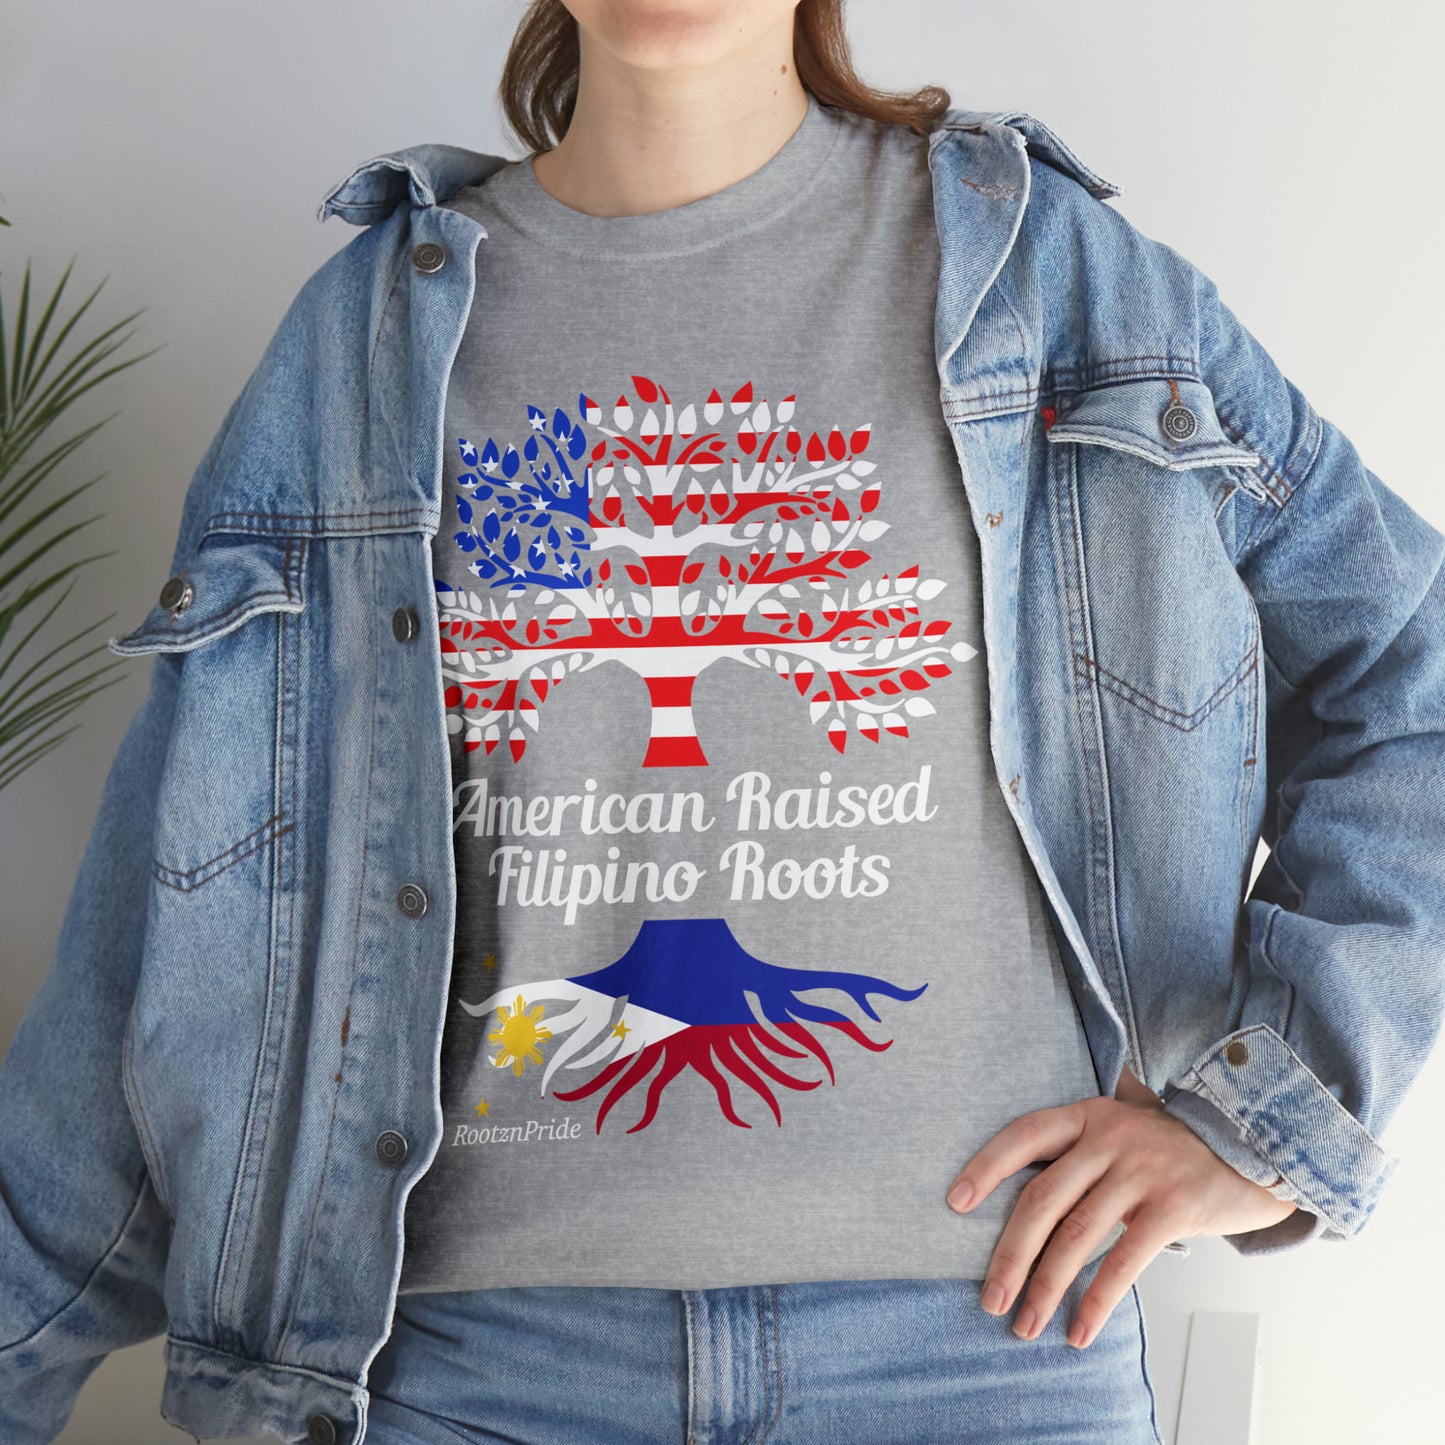 Filipino Roots Design 5: Adult T-Shirt